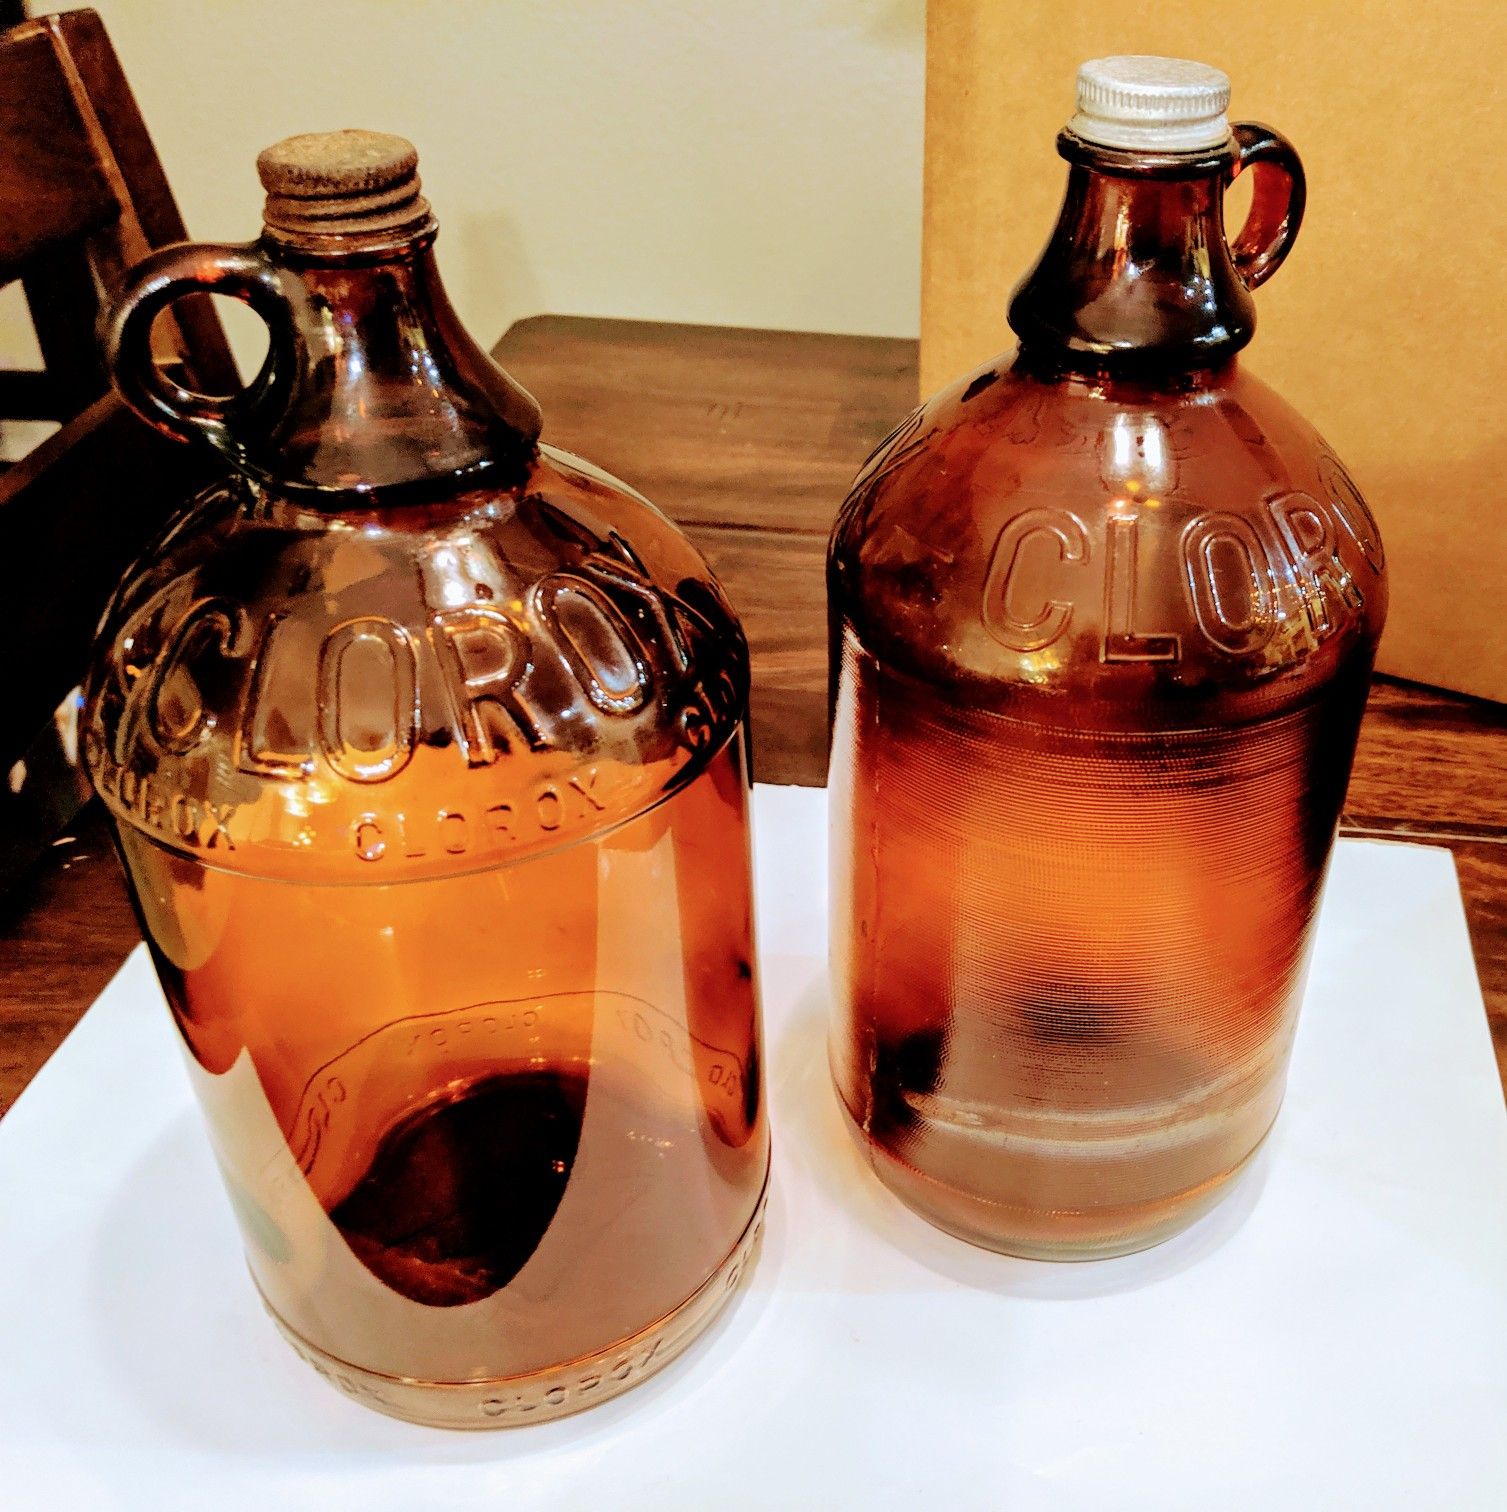 1940s antique glass Clorox bottles